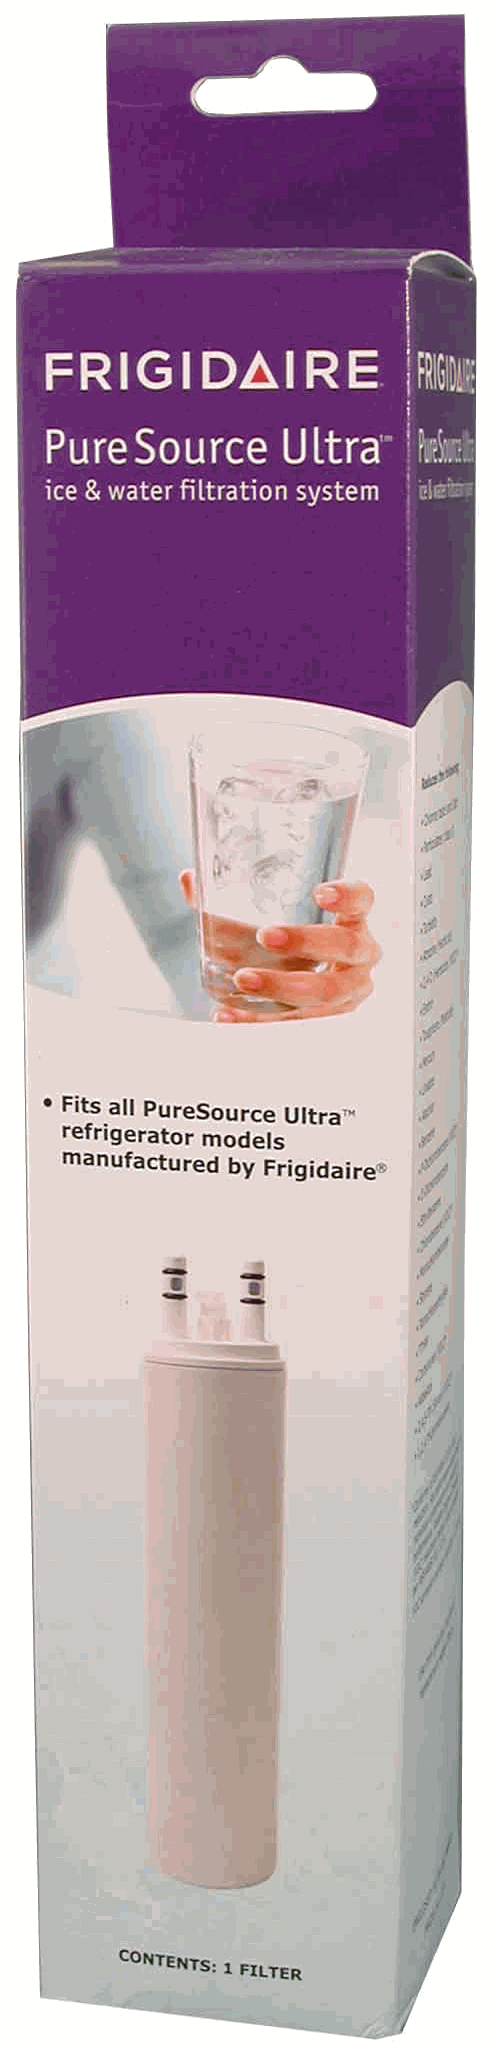 Frigidaire ULTRAWF PureSource Ultra 241791601 Refrigerator Water Filter 